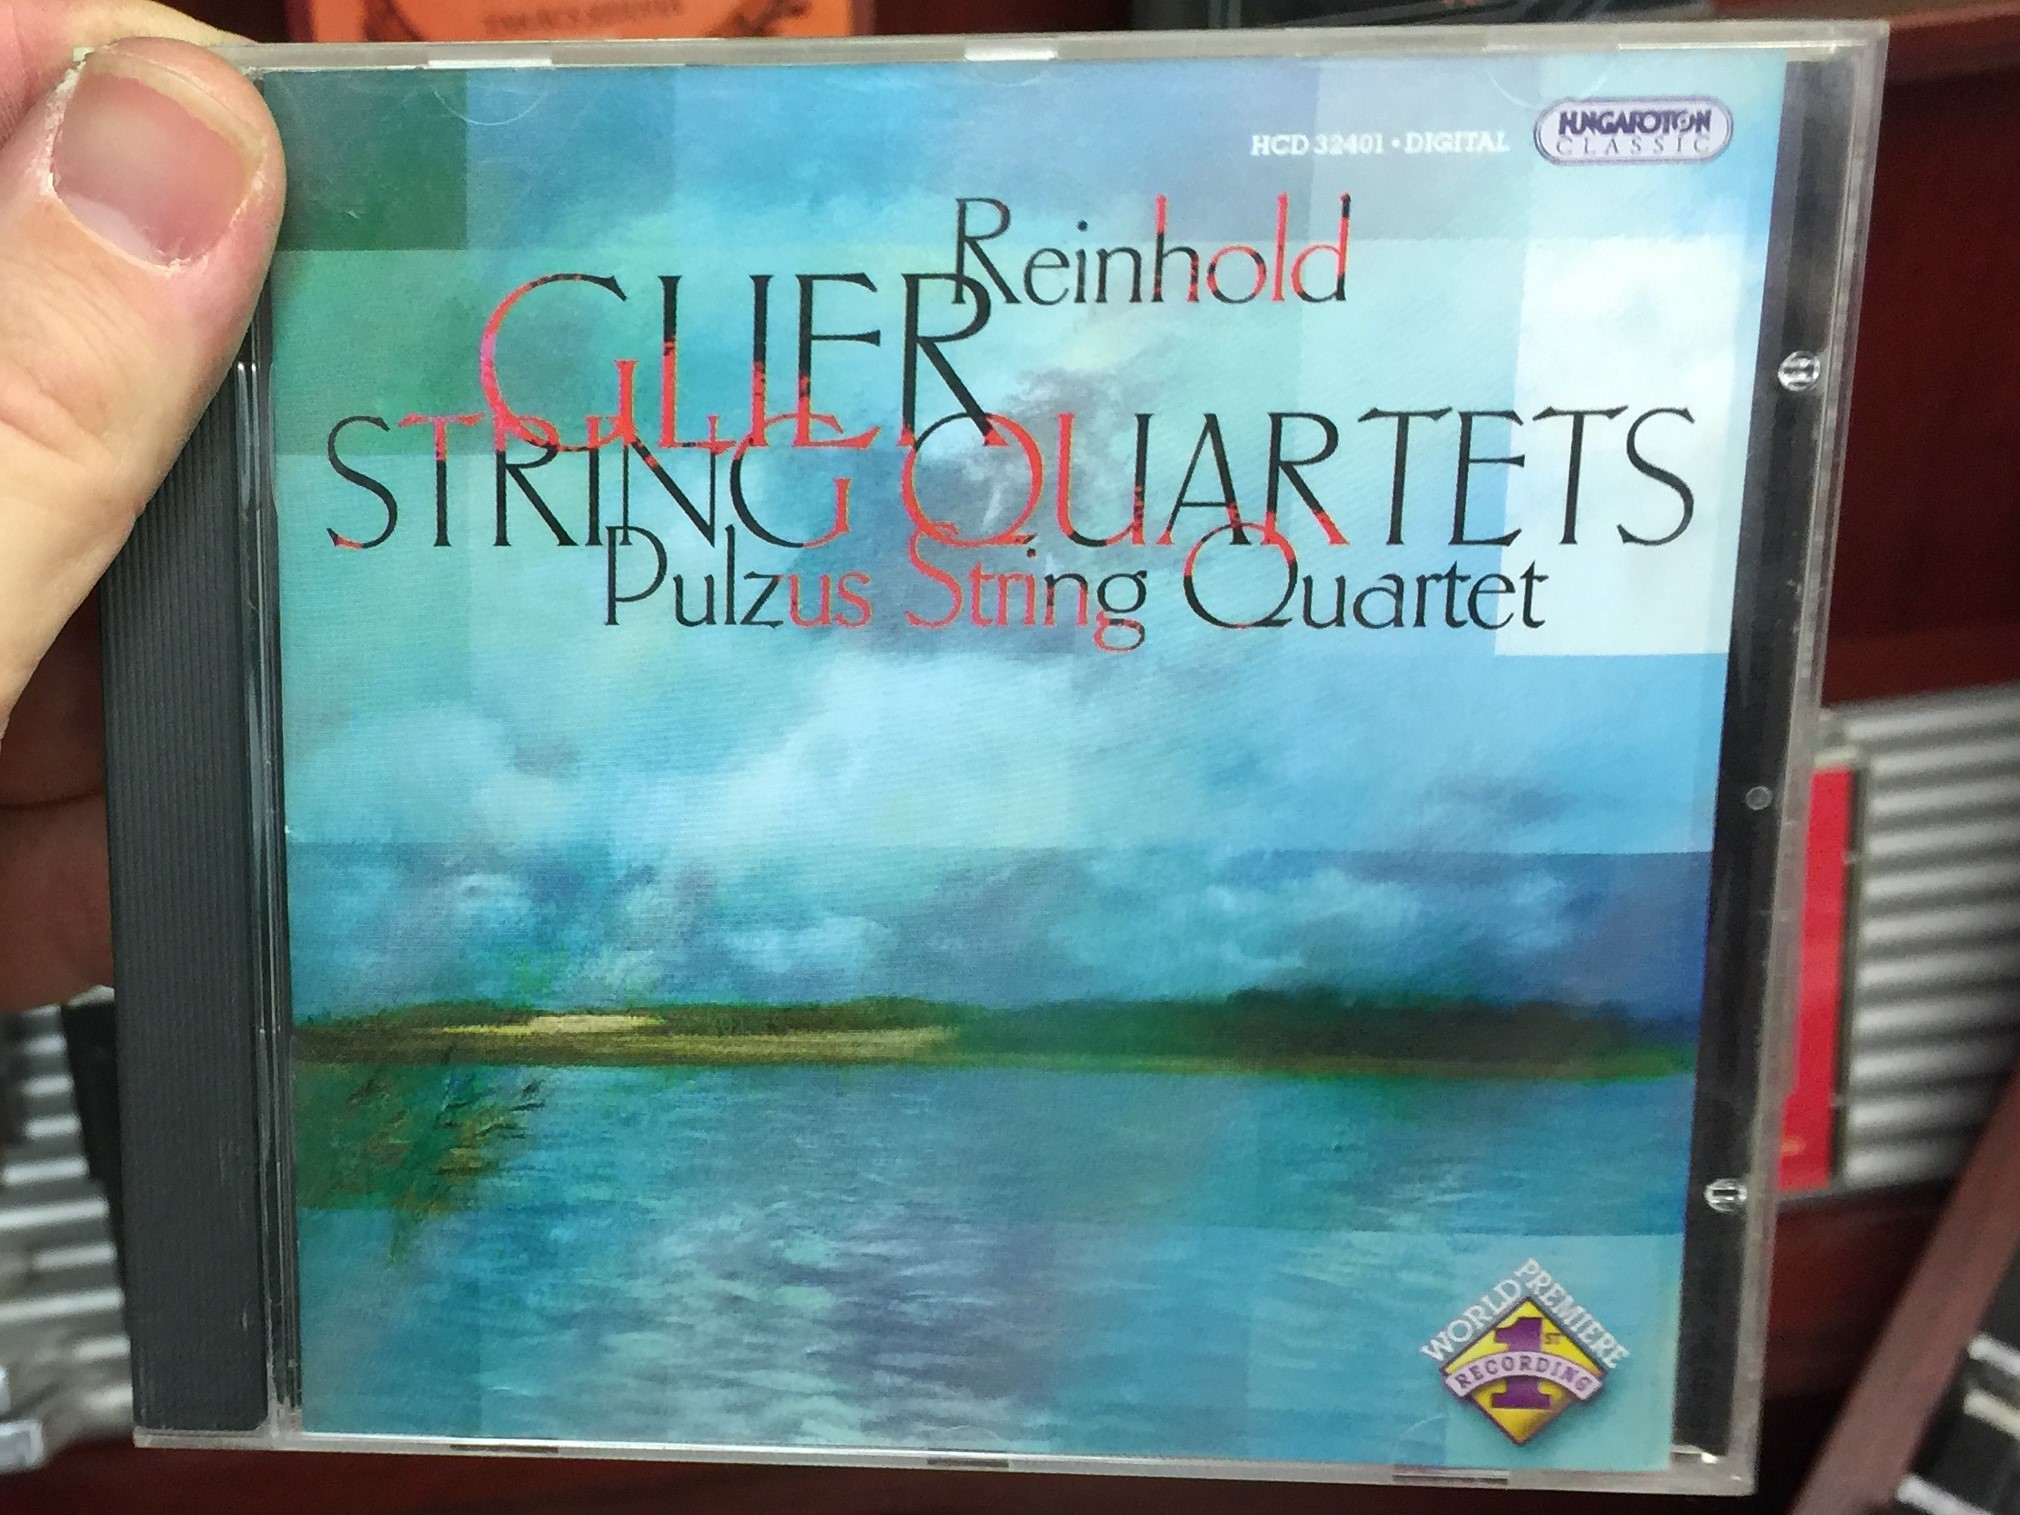 reinhold-glier-string-quartets-pulzus-string-quartet-hungaroton-classic-audio-cd-2006-stereo-hcd-32401-1-.jpg